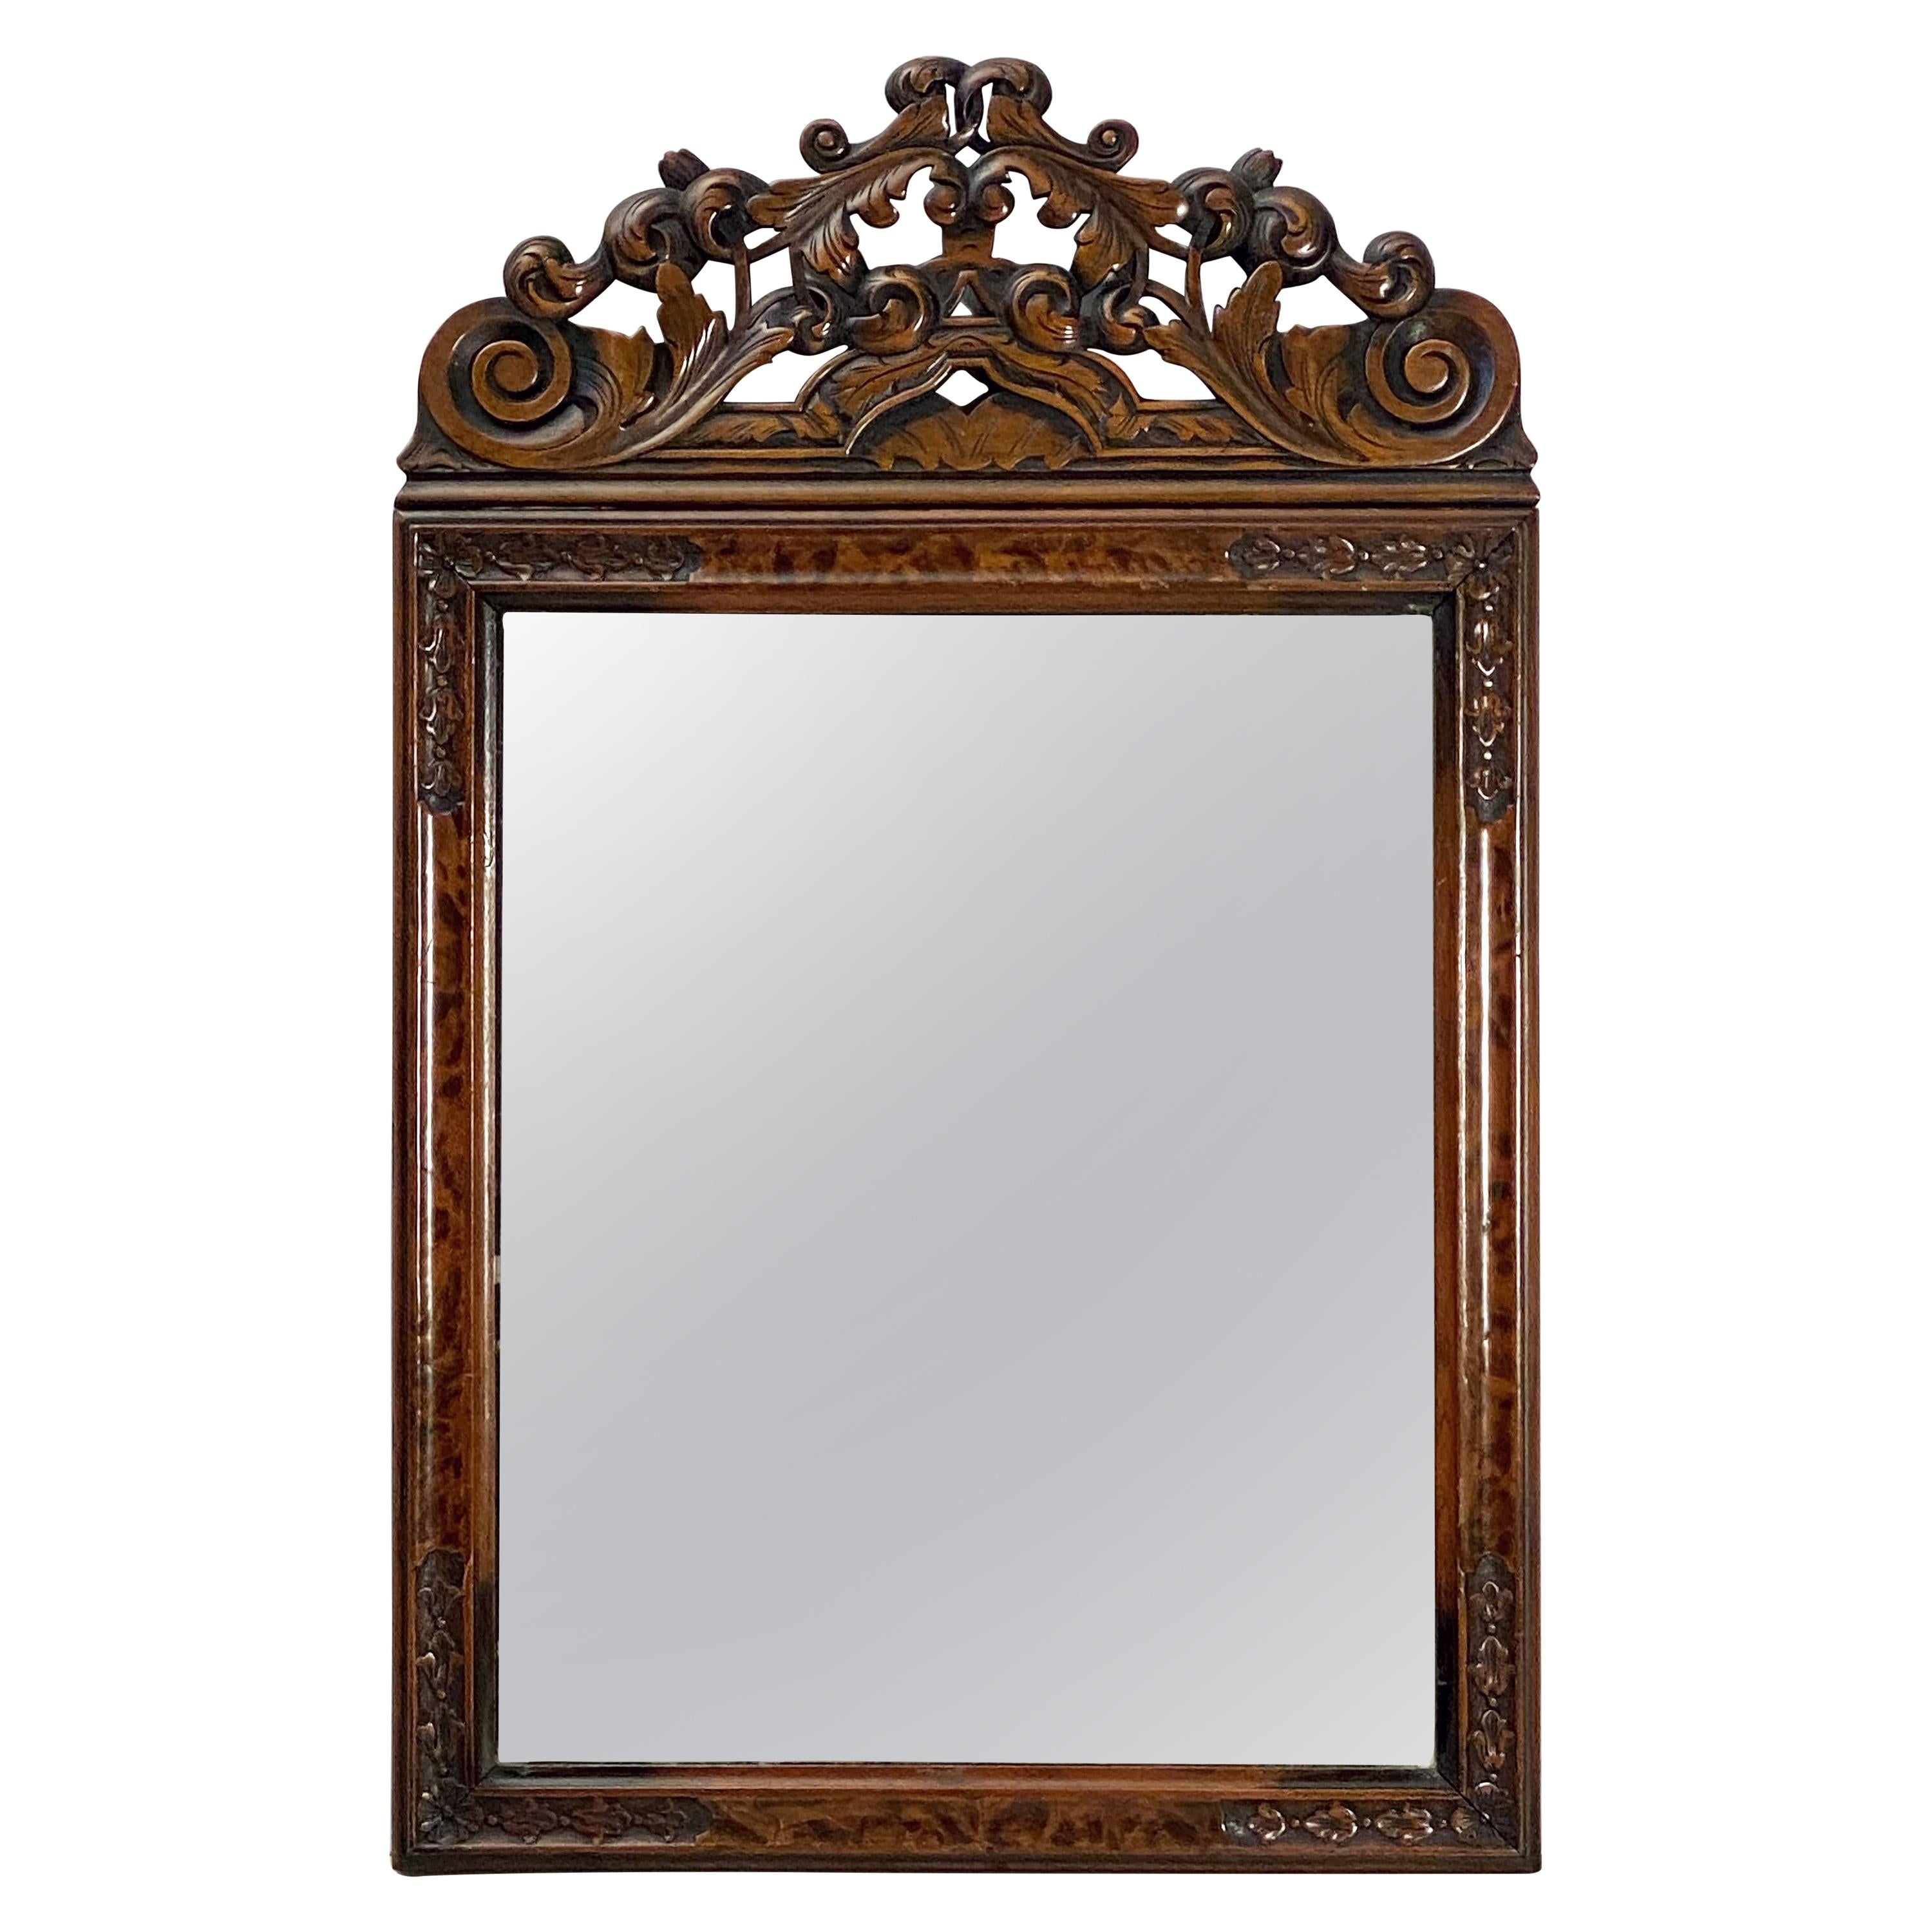 English Rectangular Mirror in Carved Frame of Walnut (H 33 3/8 x W 21)